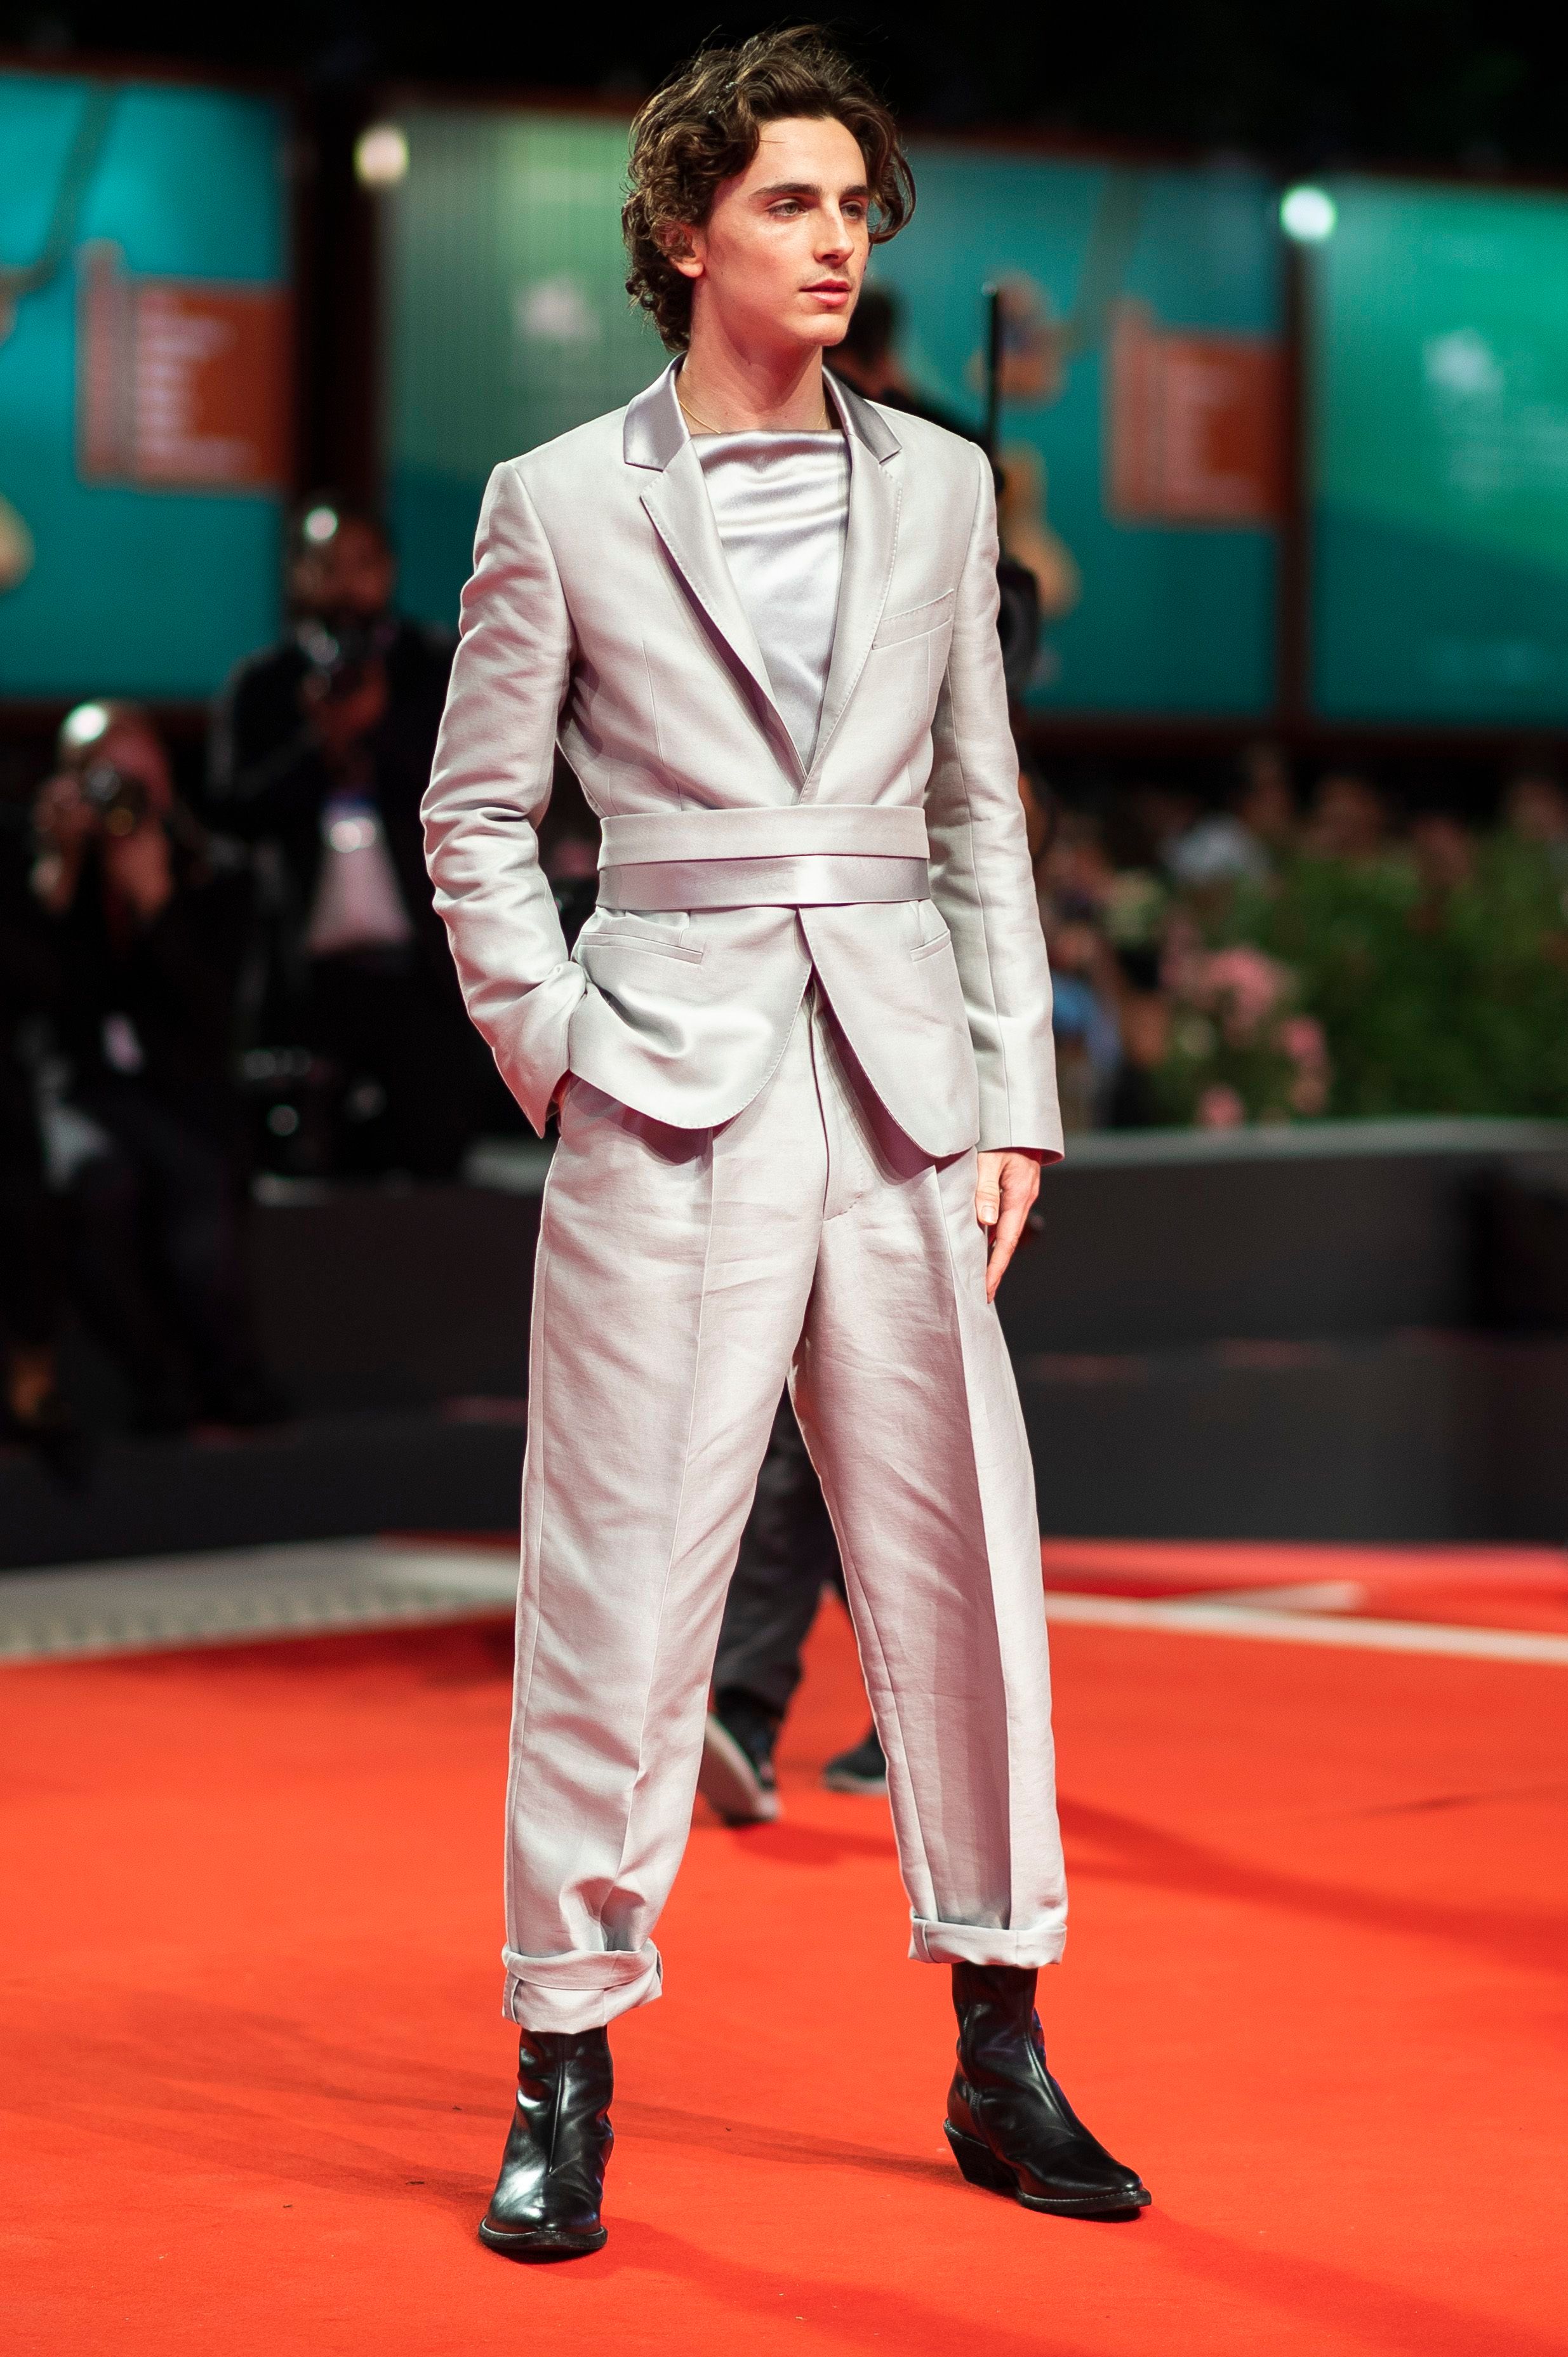 Timothée Chalamet's Best Red Carpet Looks Break The Rules